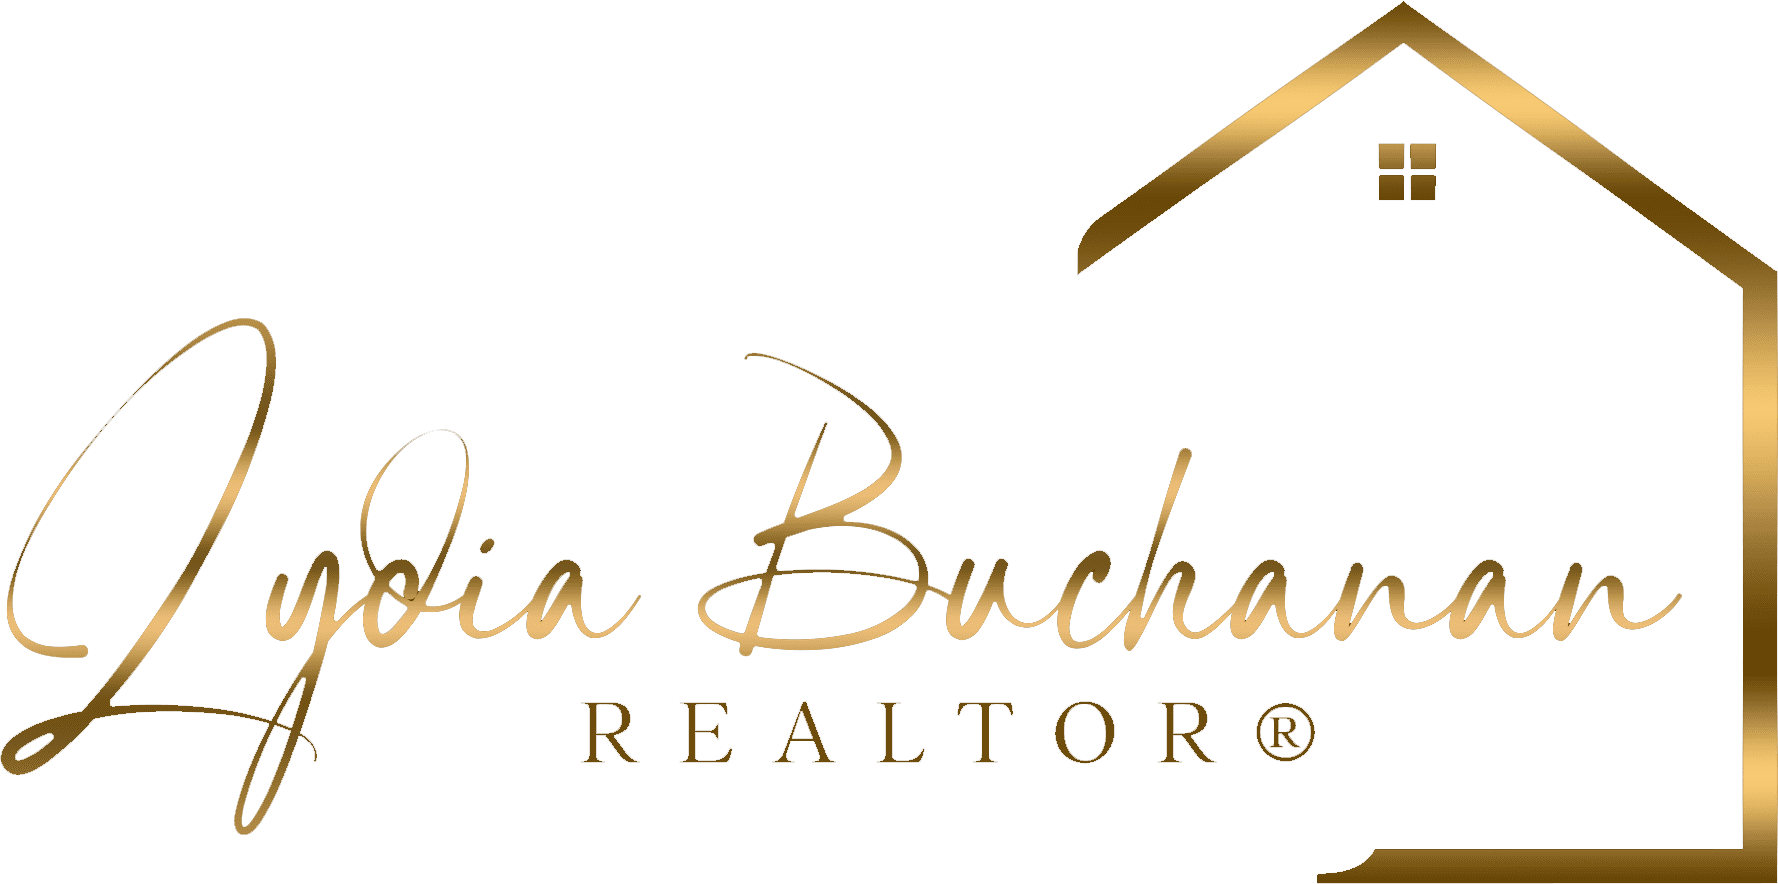 A gold foil logo that says ria buchman realtor